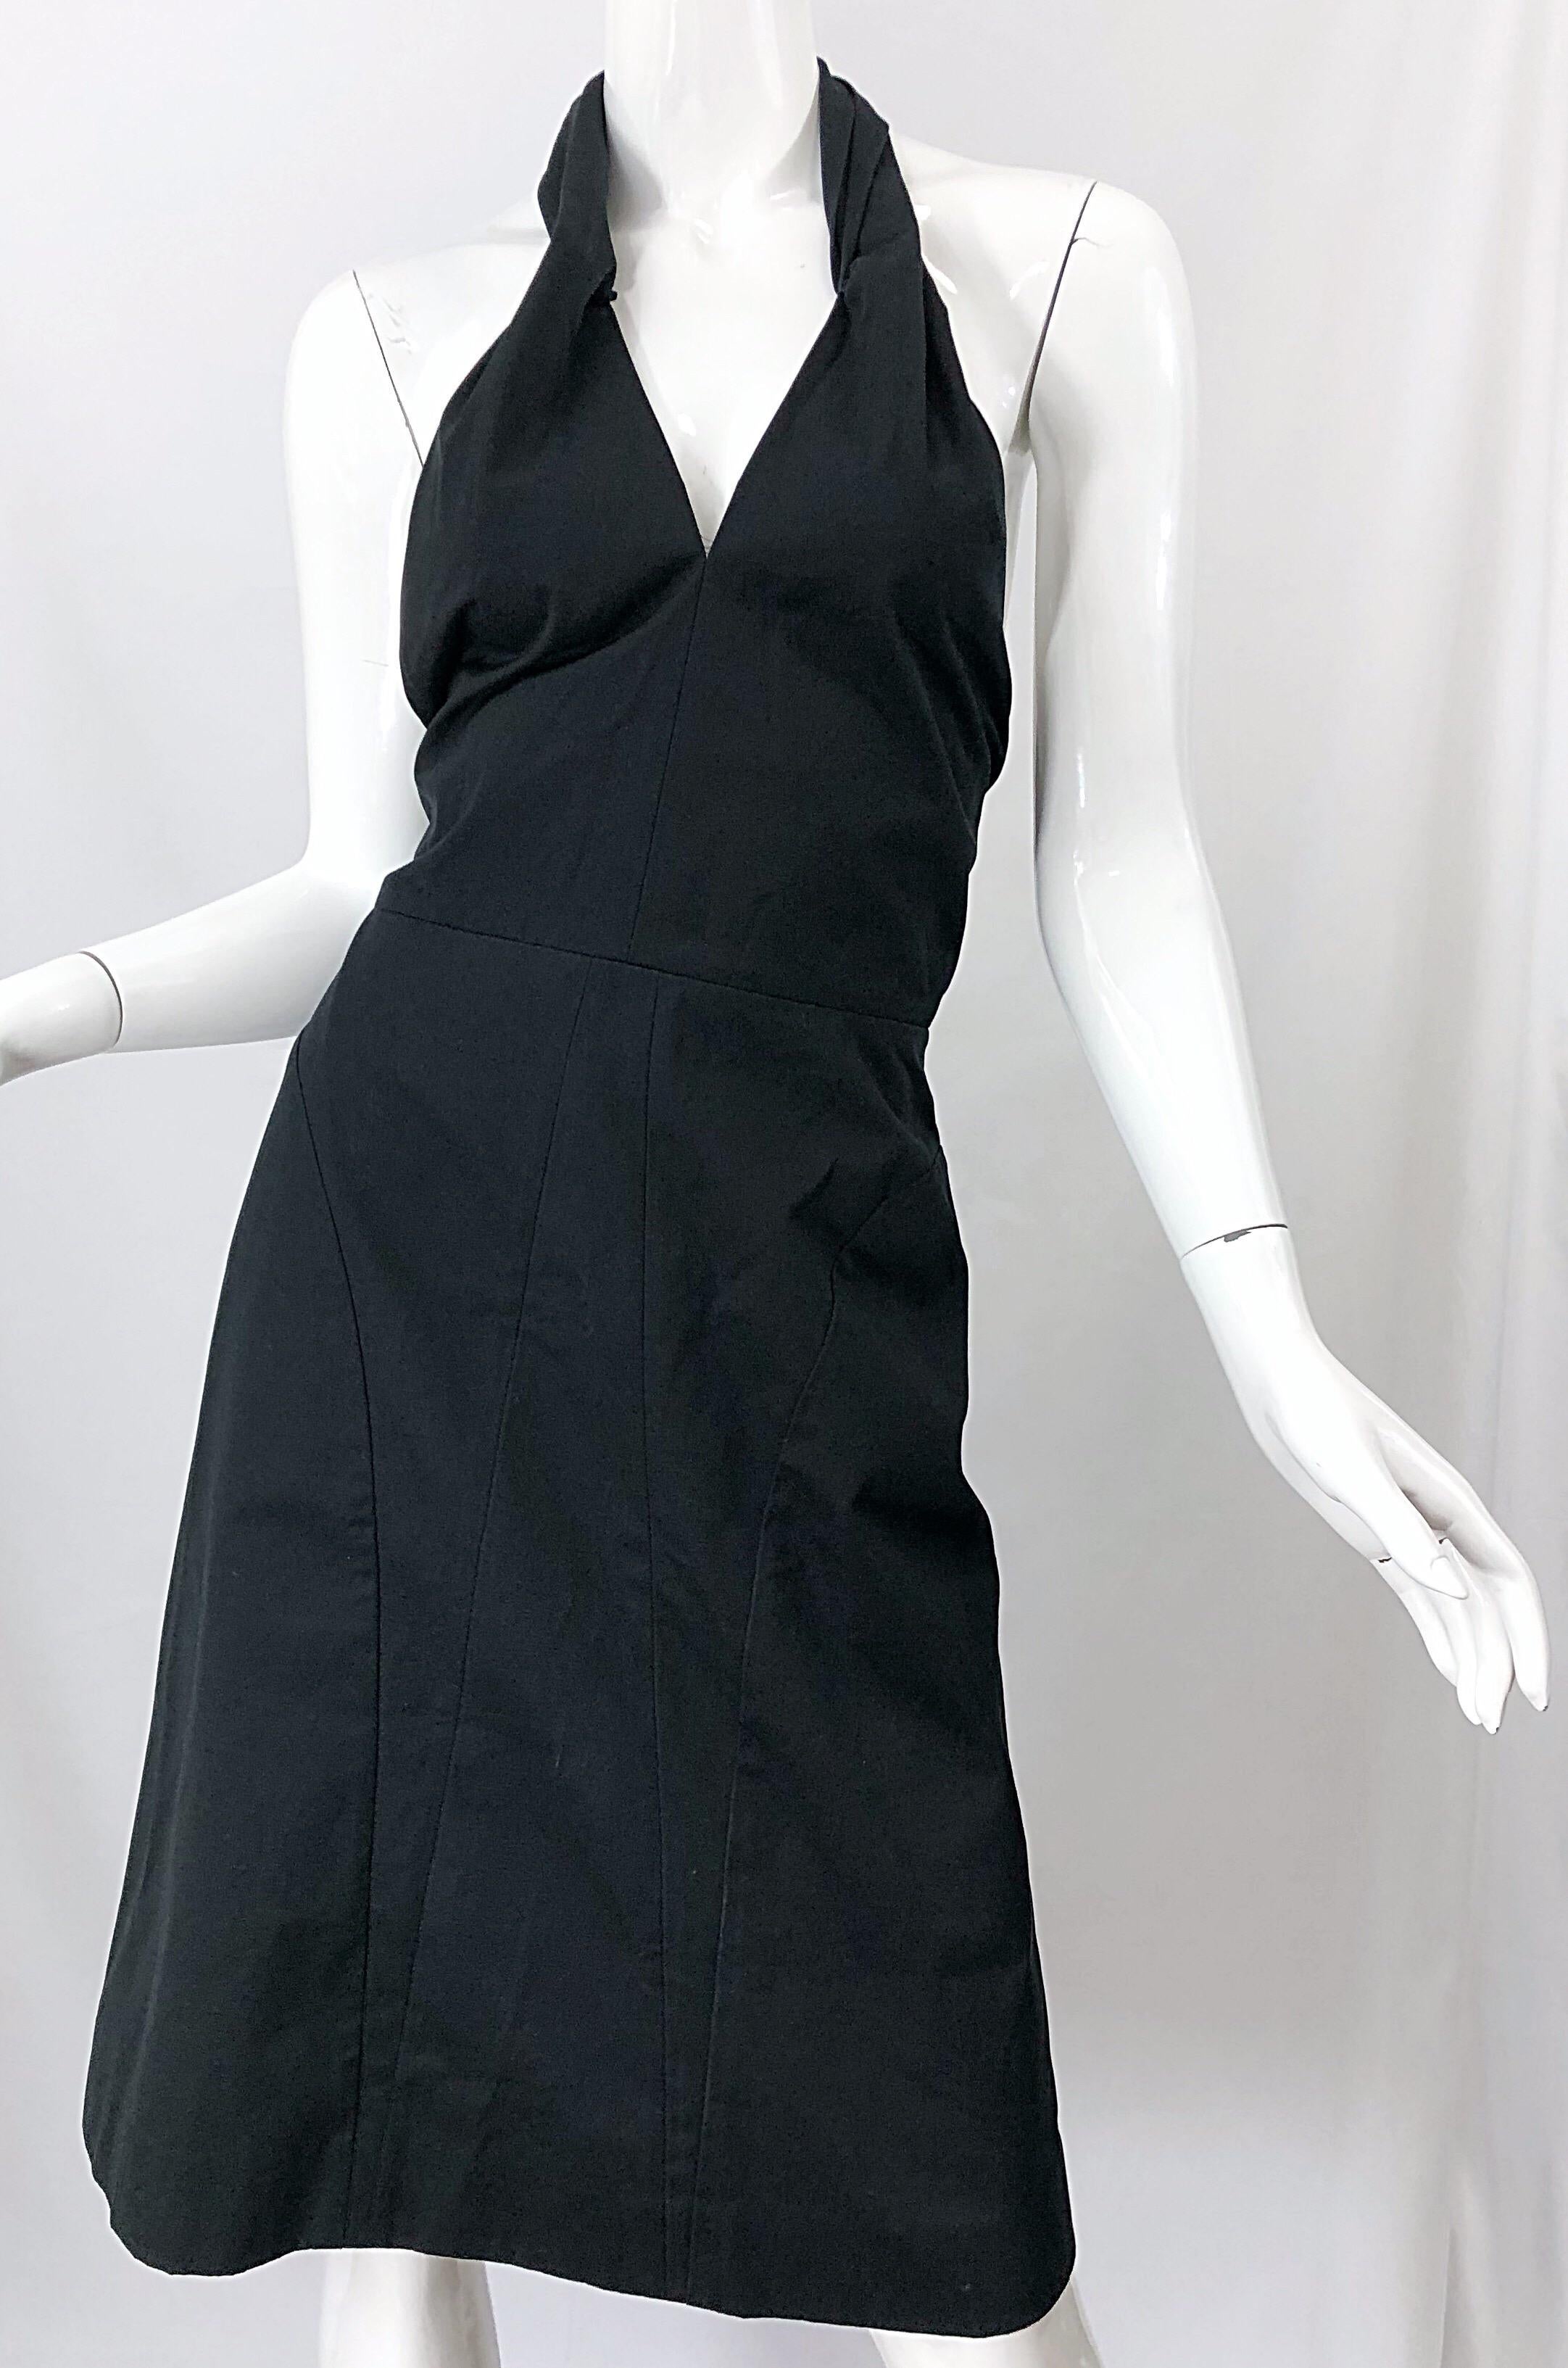 Yves Saint Laurent SS 2010 Runway Black Cotton Size 38 Plunging YSL Halter Dress For Sale 1